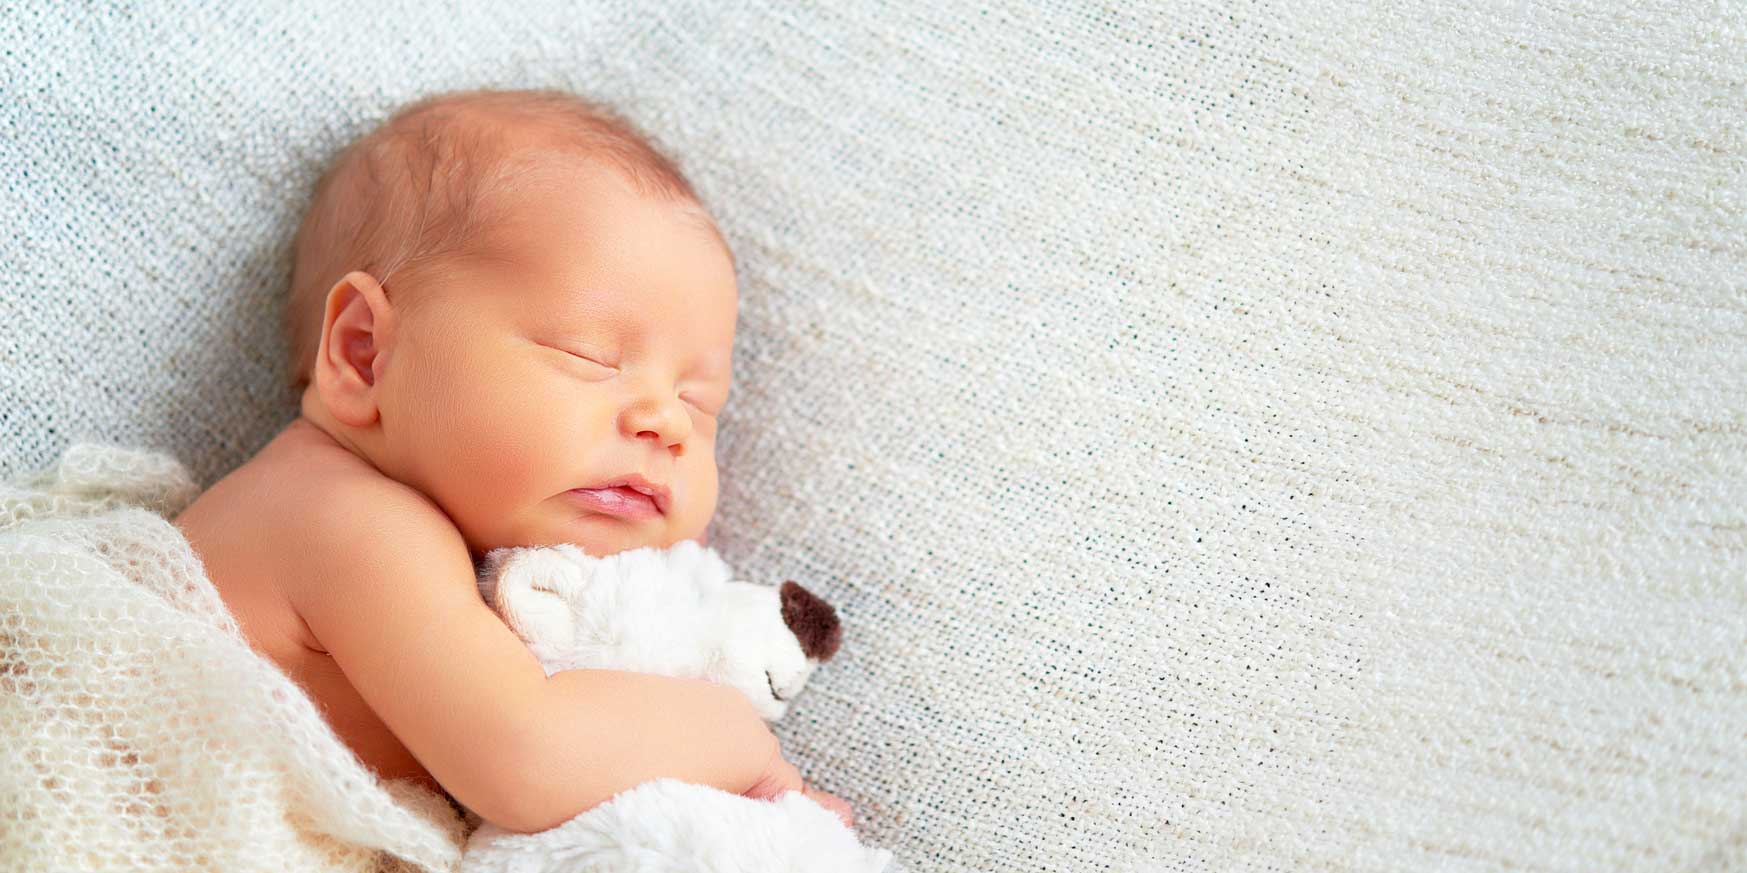 FDA Censorship Could Impact Preterm Births